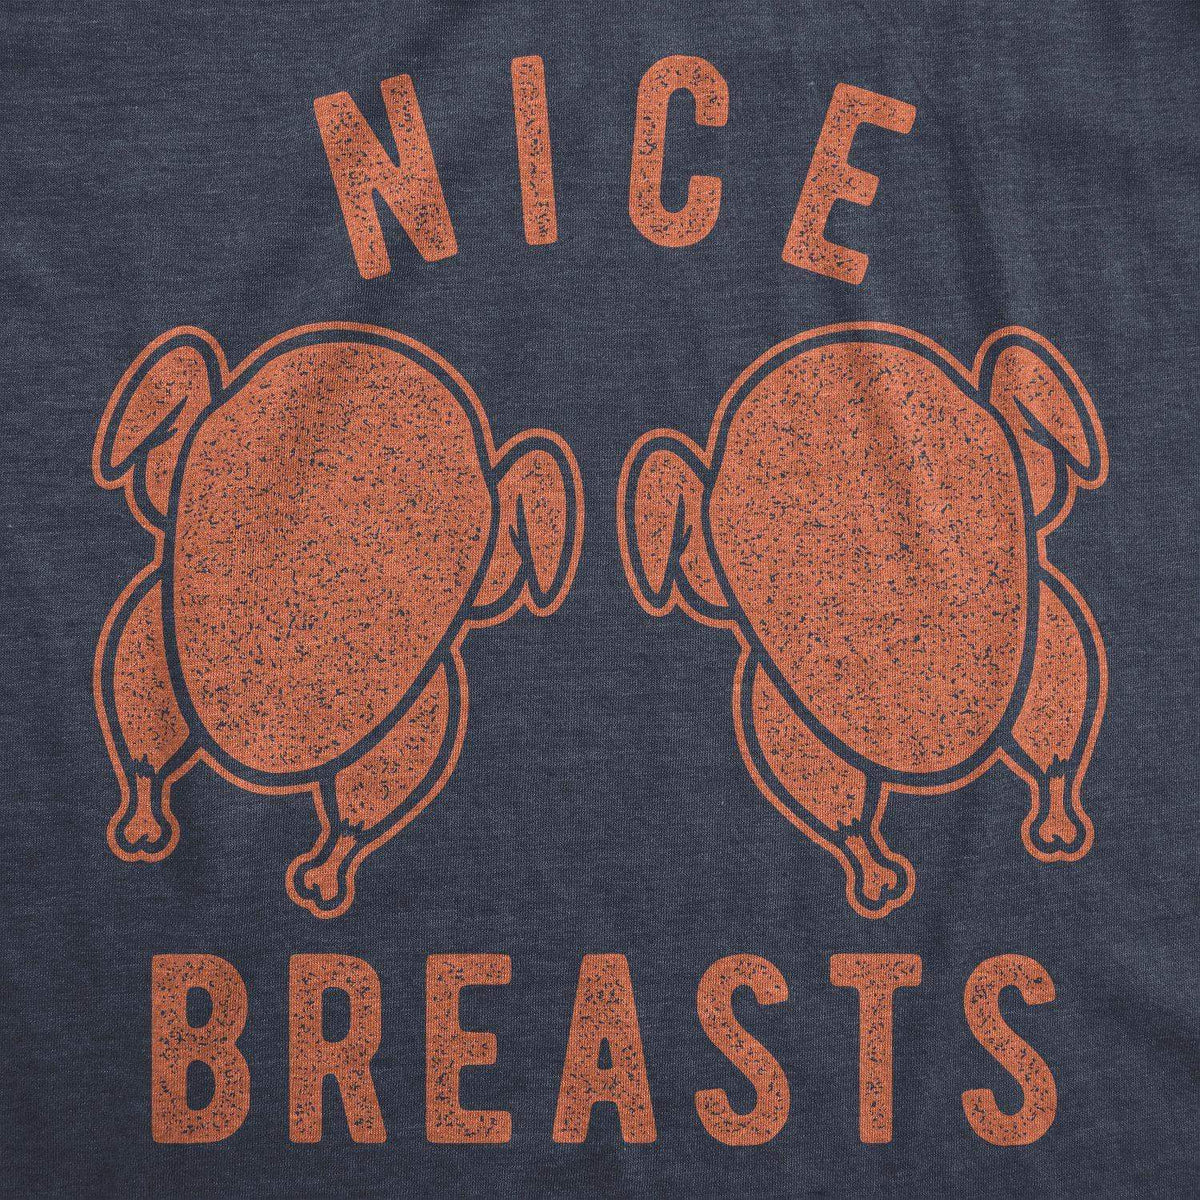 Nice Turkey Breasts Women&#39;s Tshirt - Crazy Dog T-Shirts